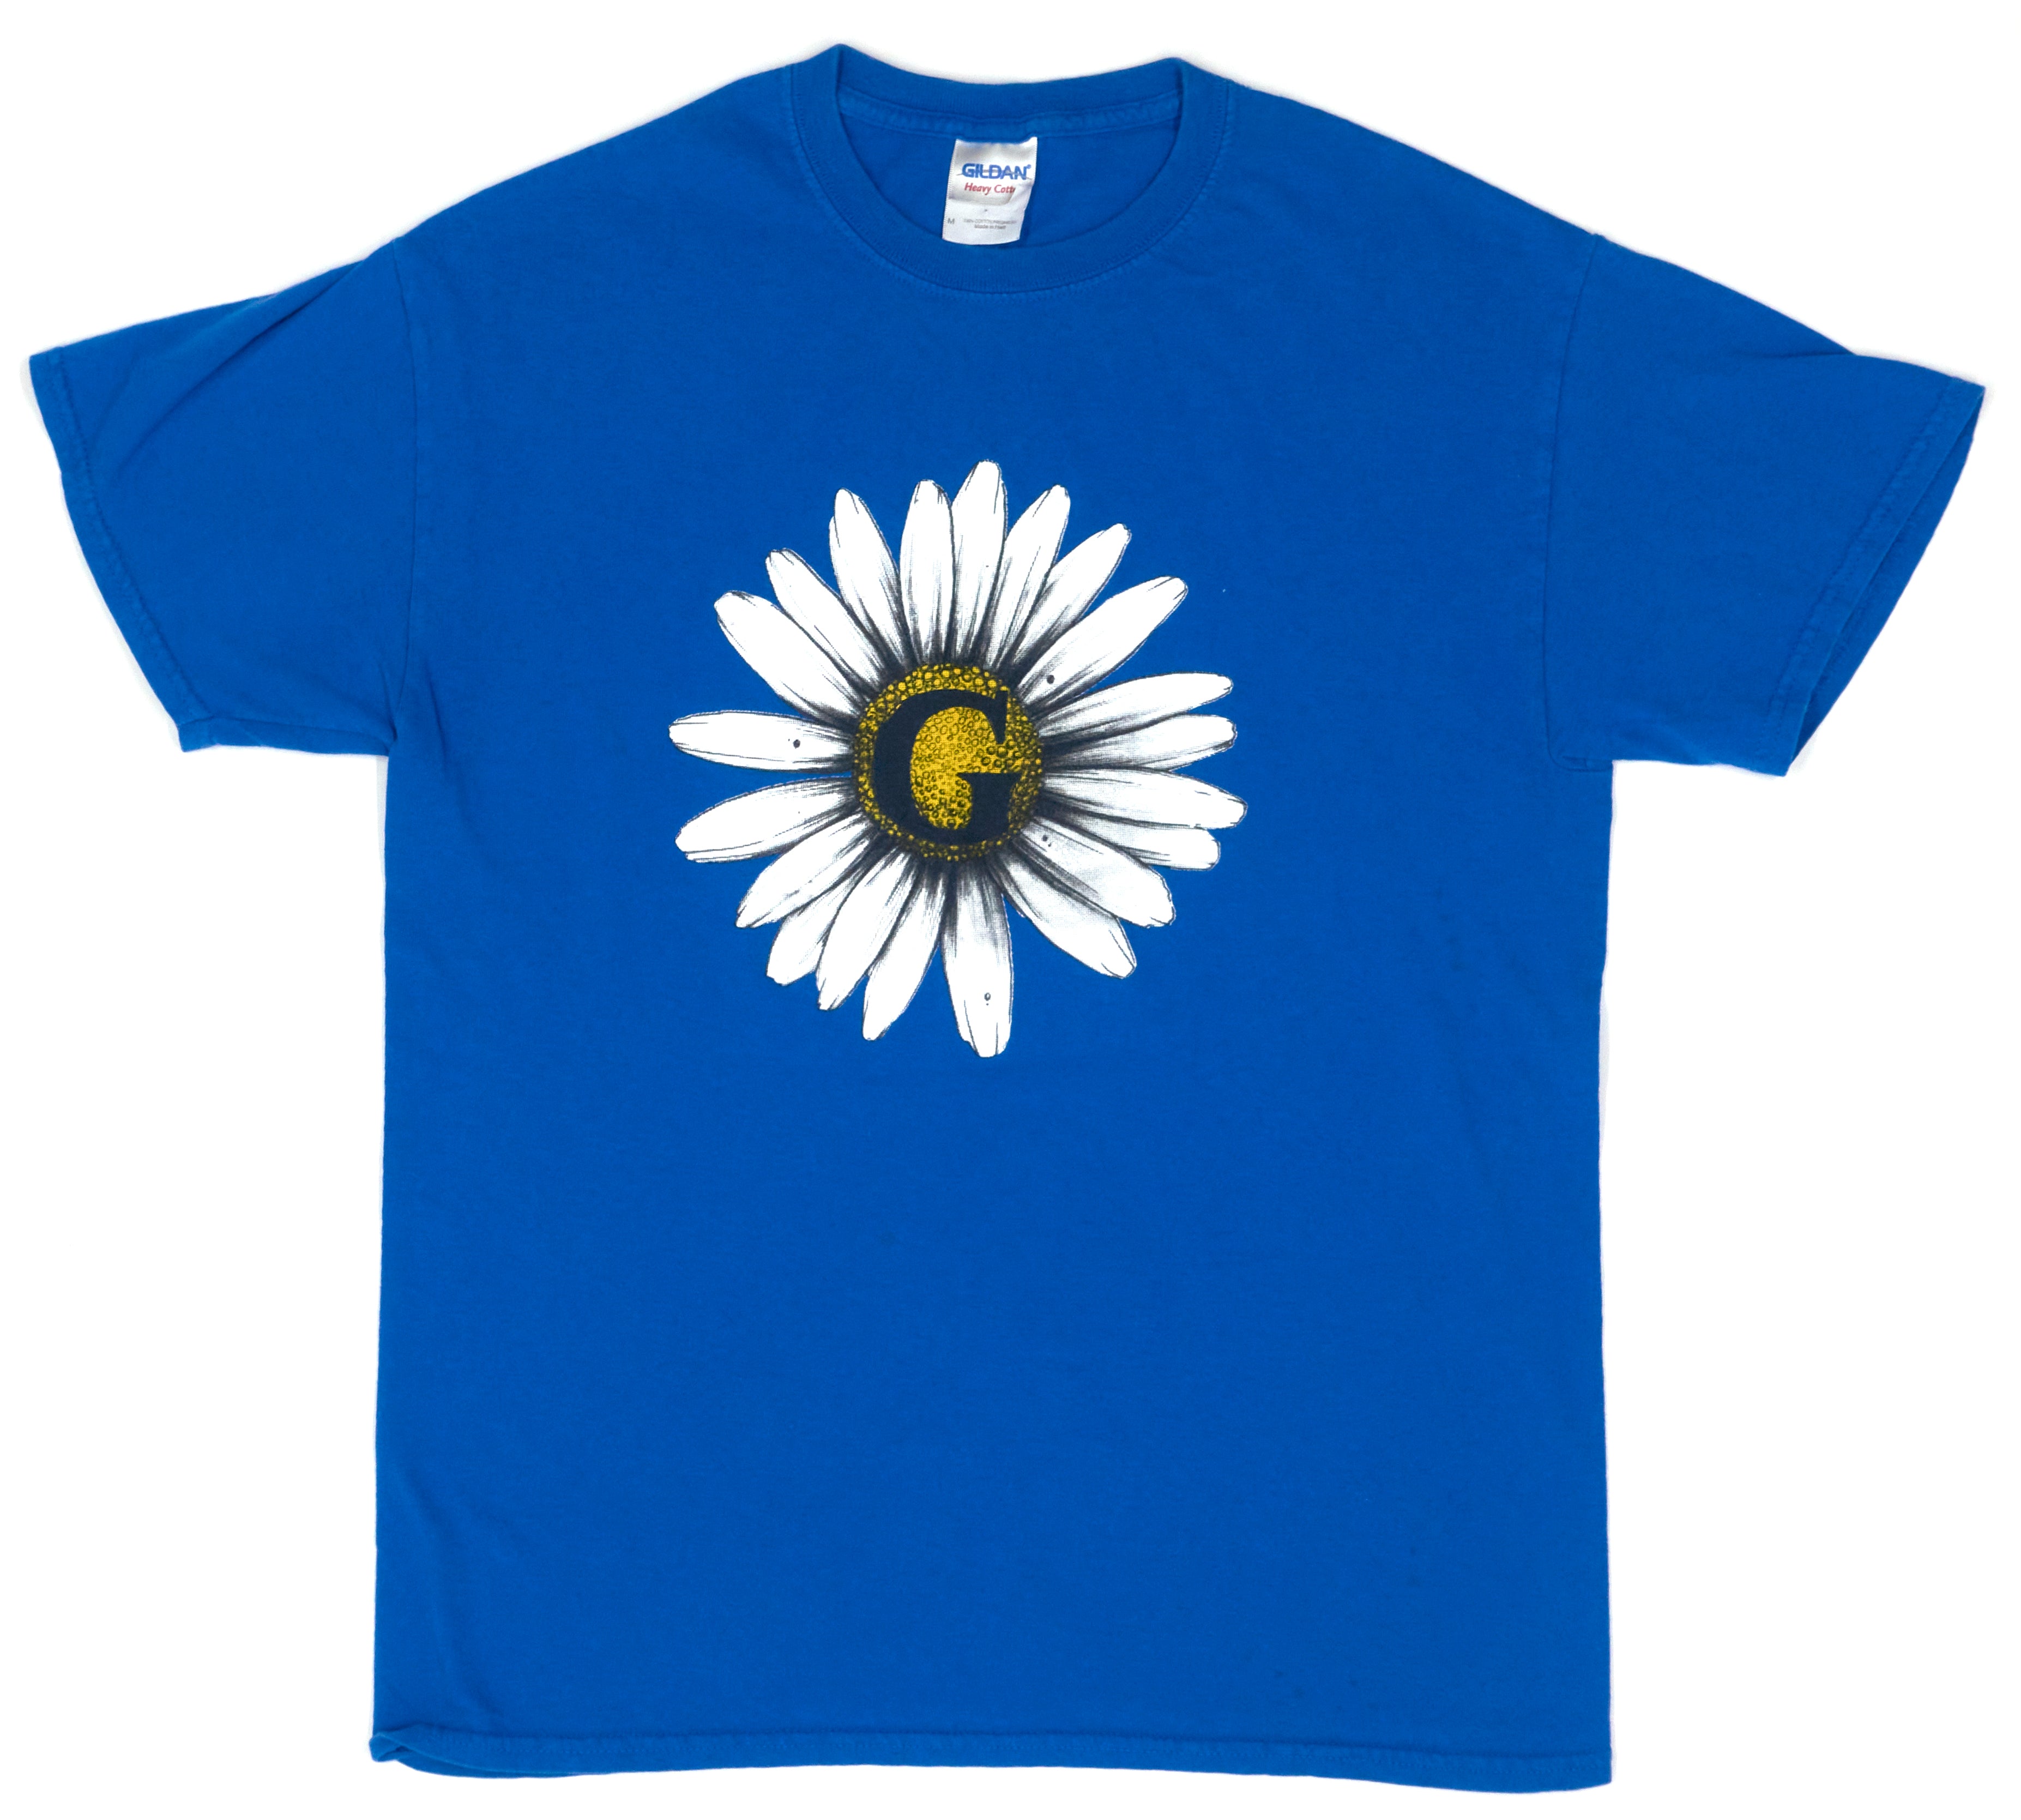 Give – Sonic Bloom 2015 Tour Shirt Size Medium